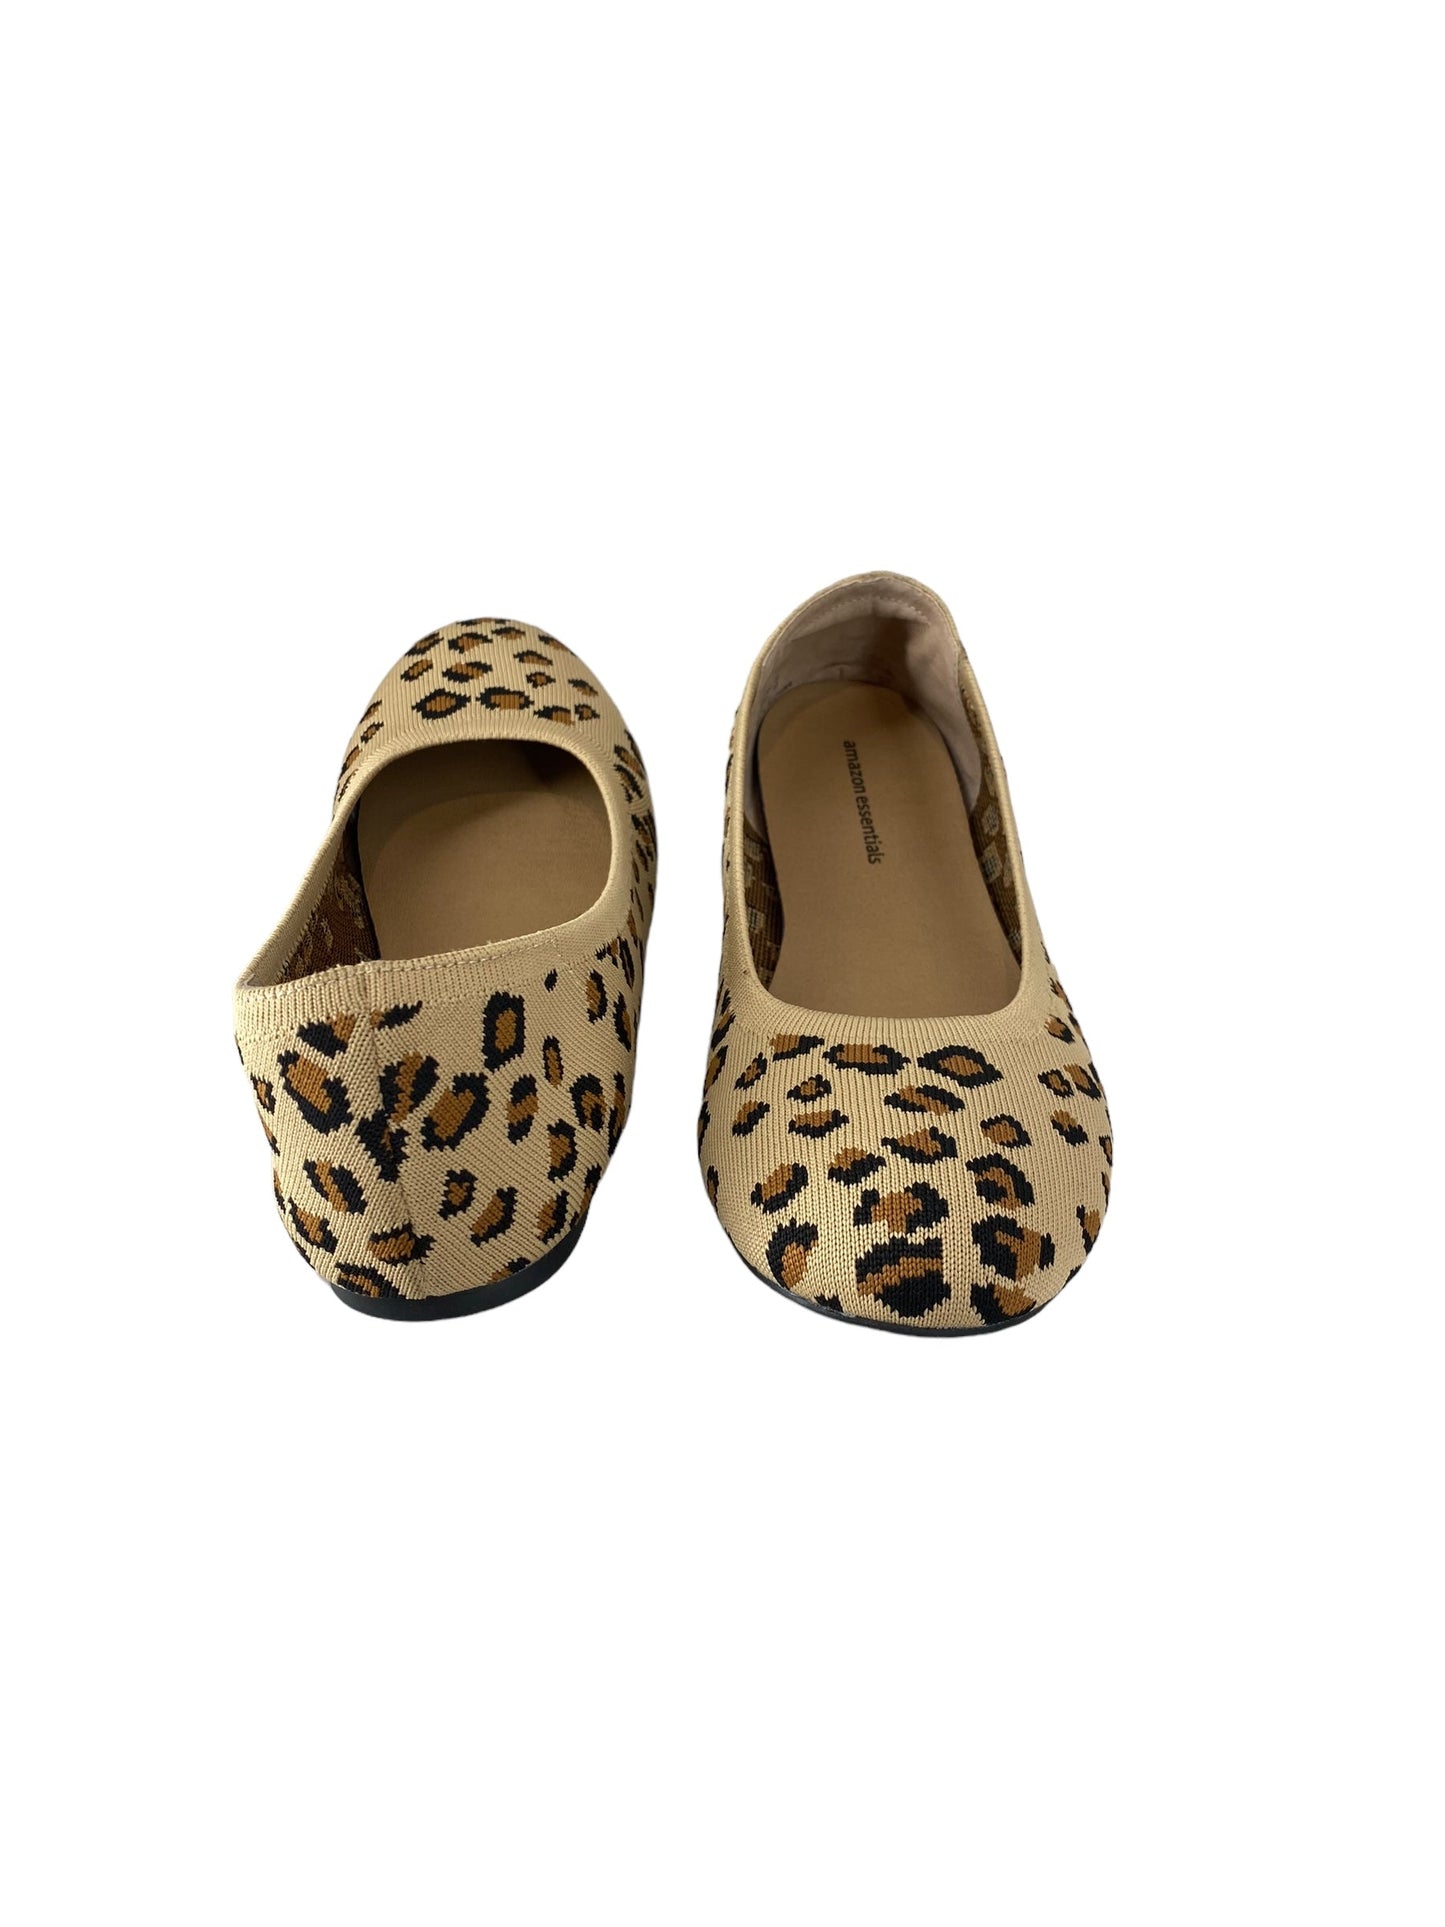 Animal Print Shoes Flats Amazon Essentials, Size 8